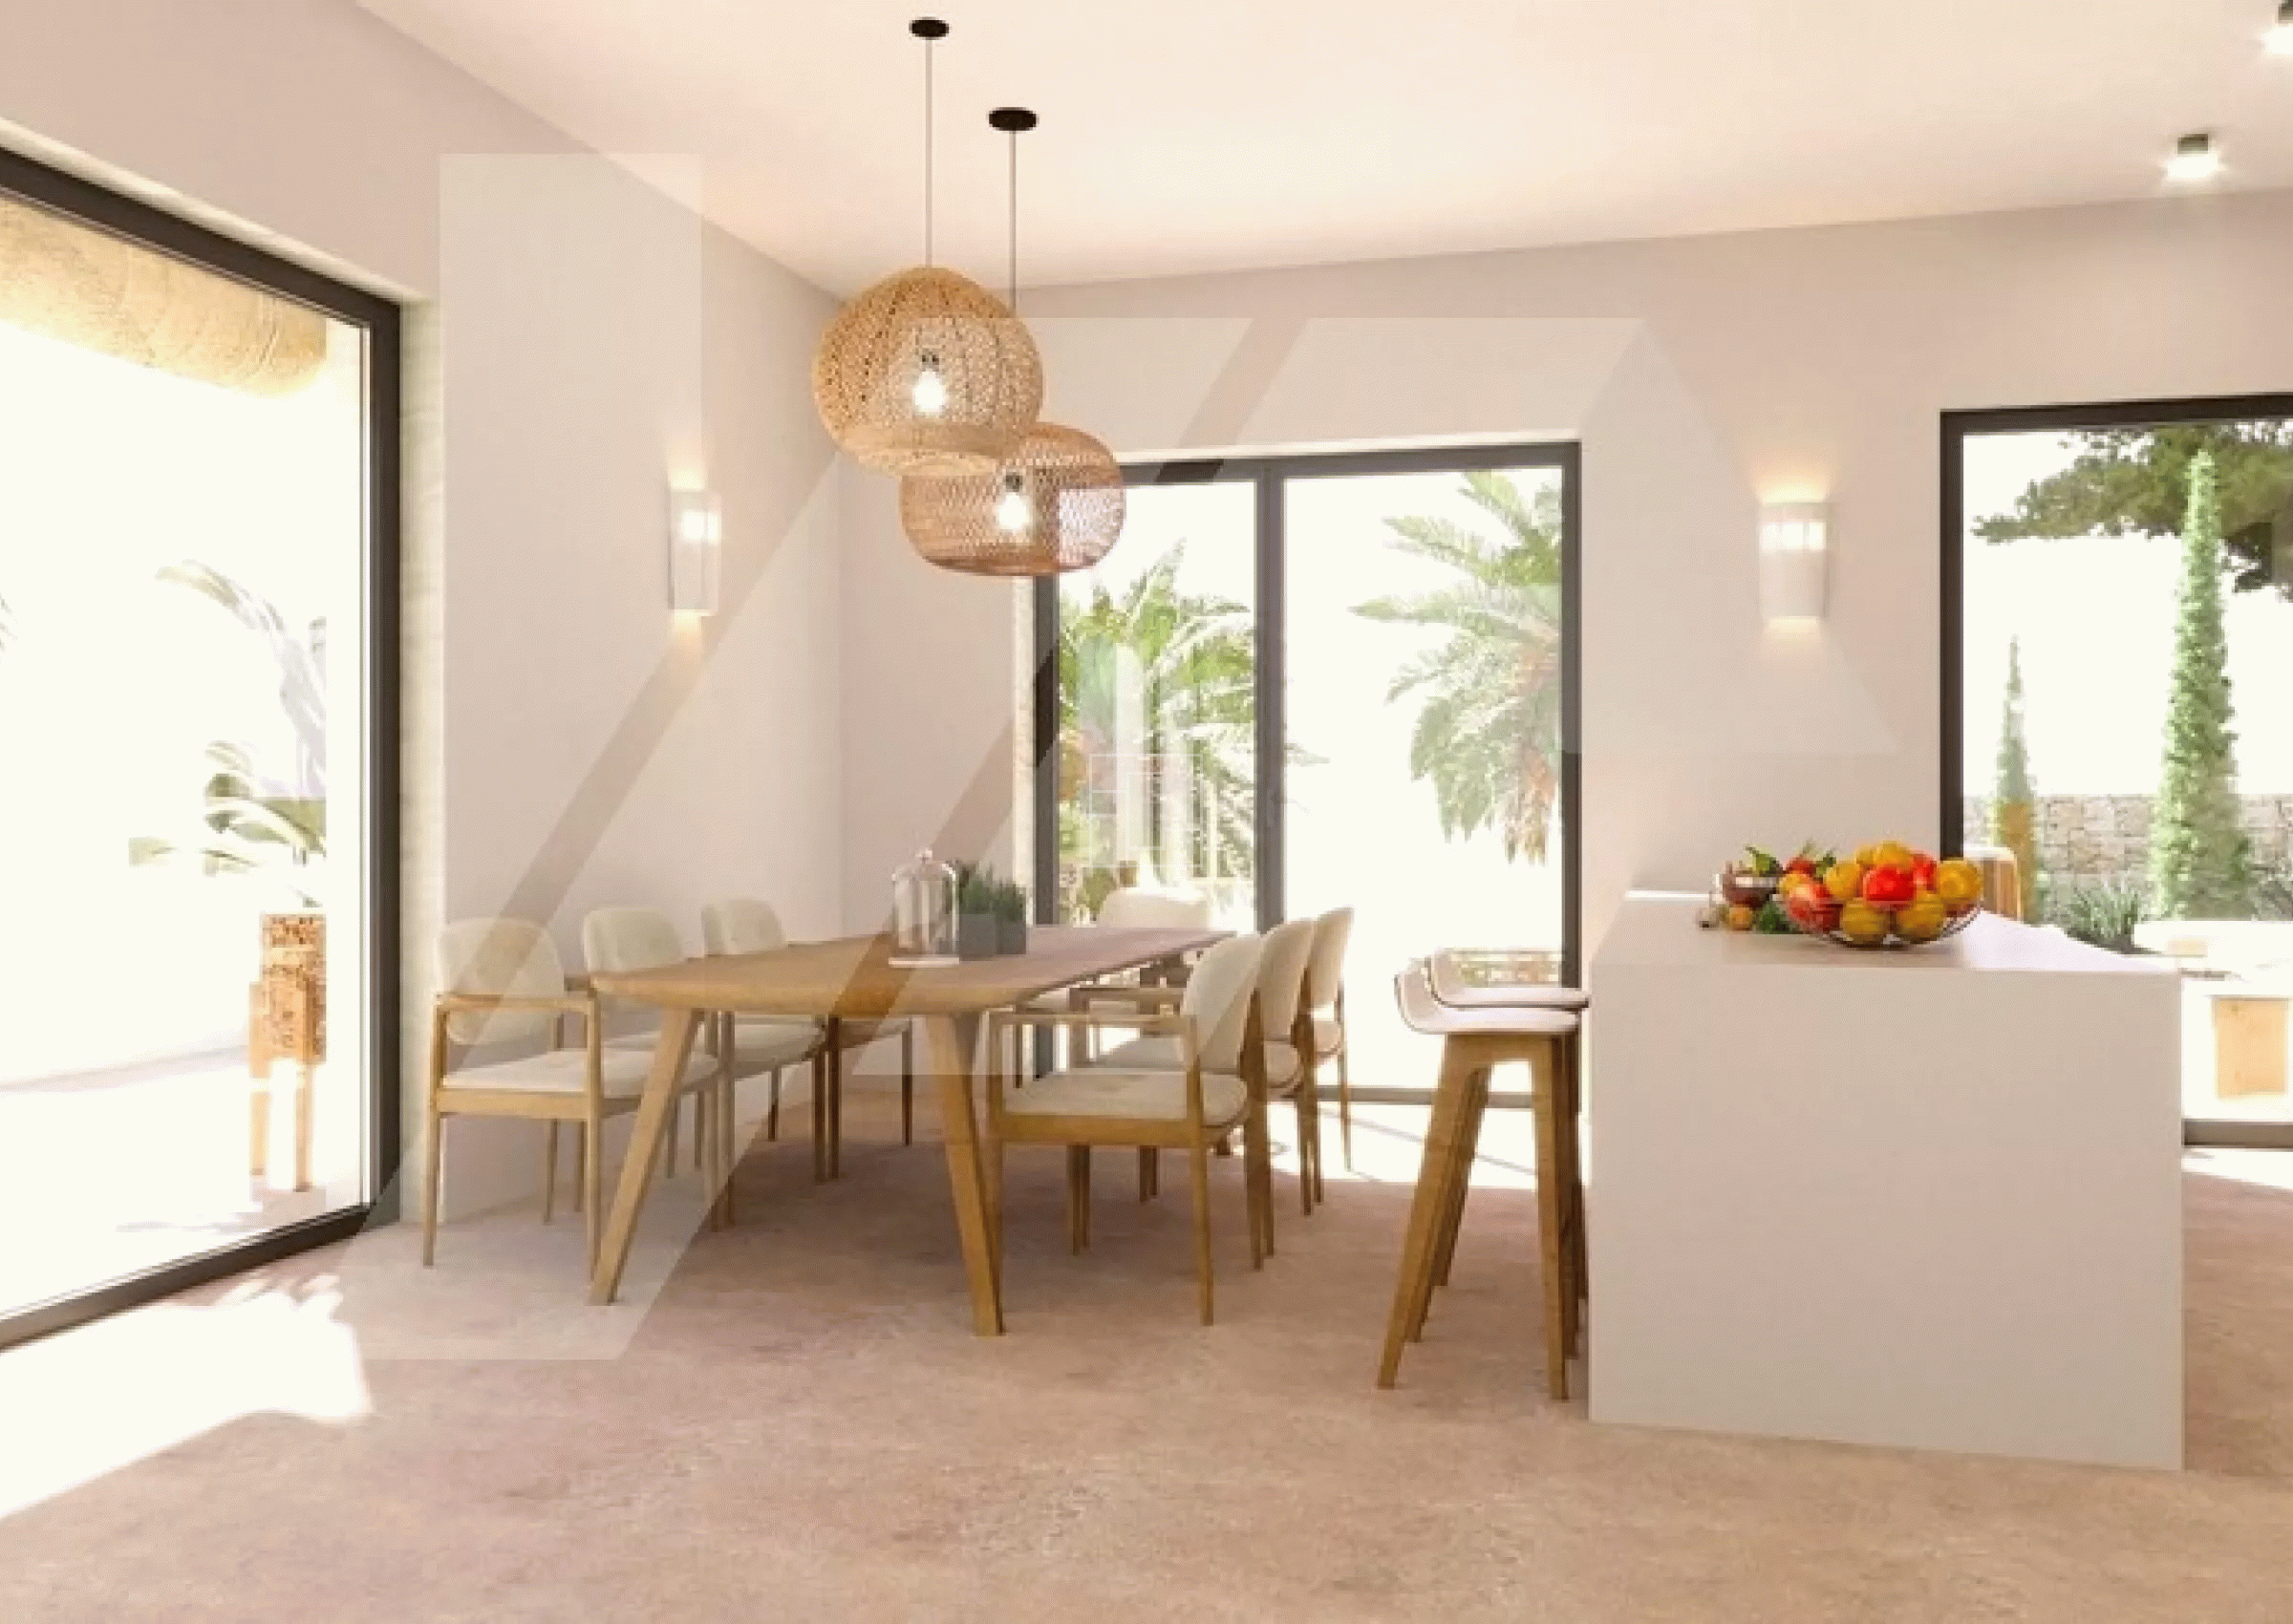 Ibiza-style villa under construction in Moraira
BPC
